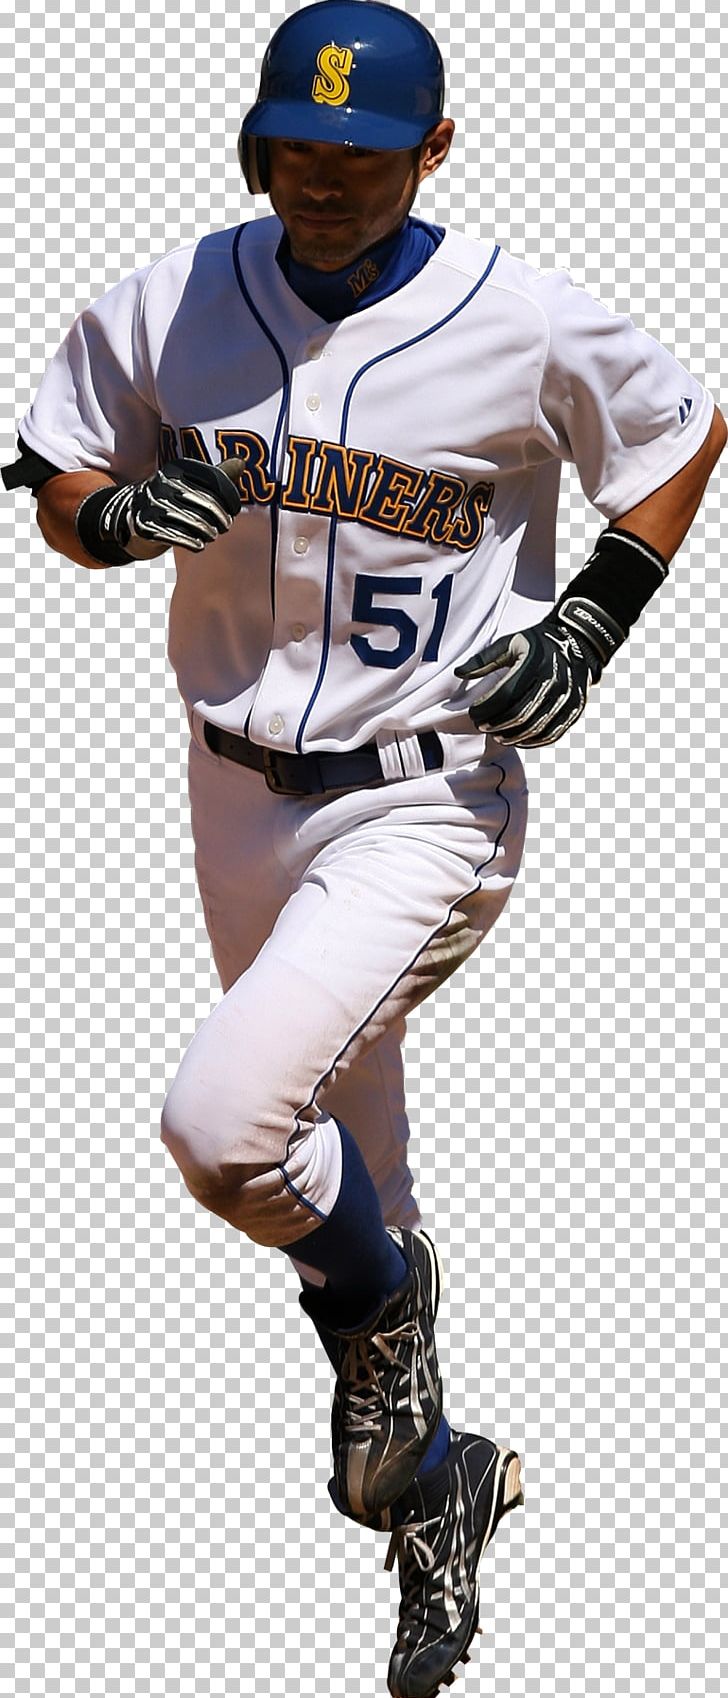 Baseball Positions Baseball Uniform Protective Gear In Sports Helmet PNG, Clipart, Alumni, Ball Game, Baseball, Baseball Equipment, Baseball Player Free PNG Download